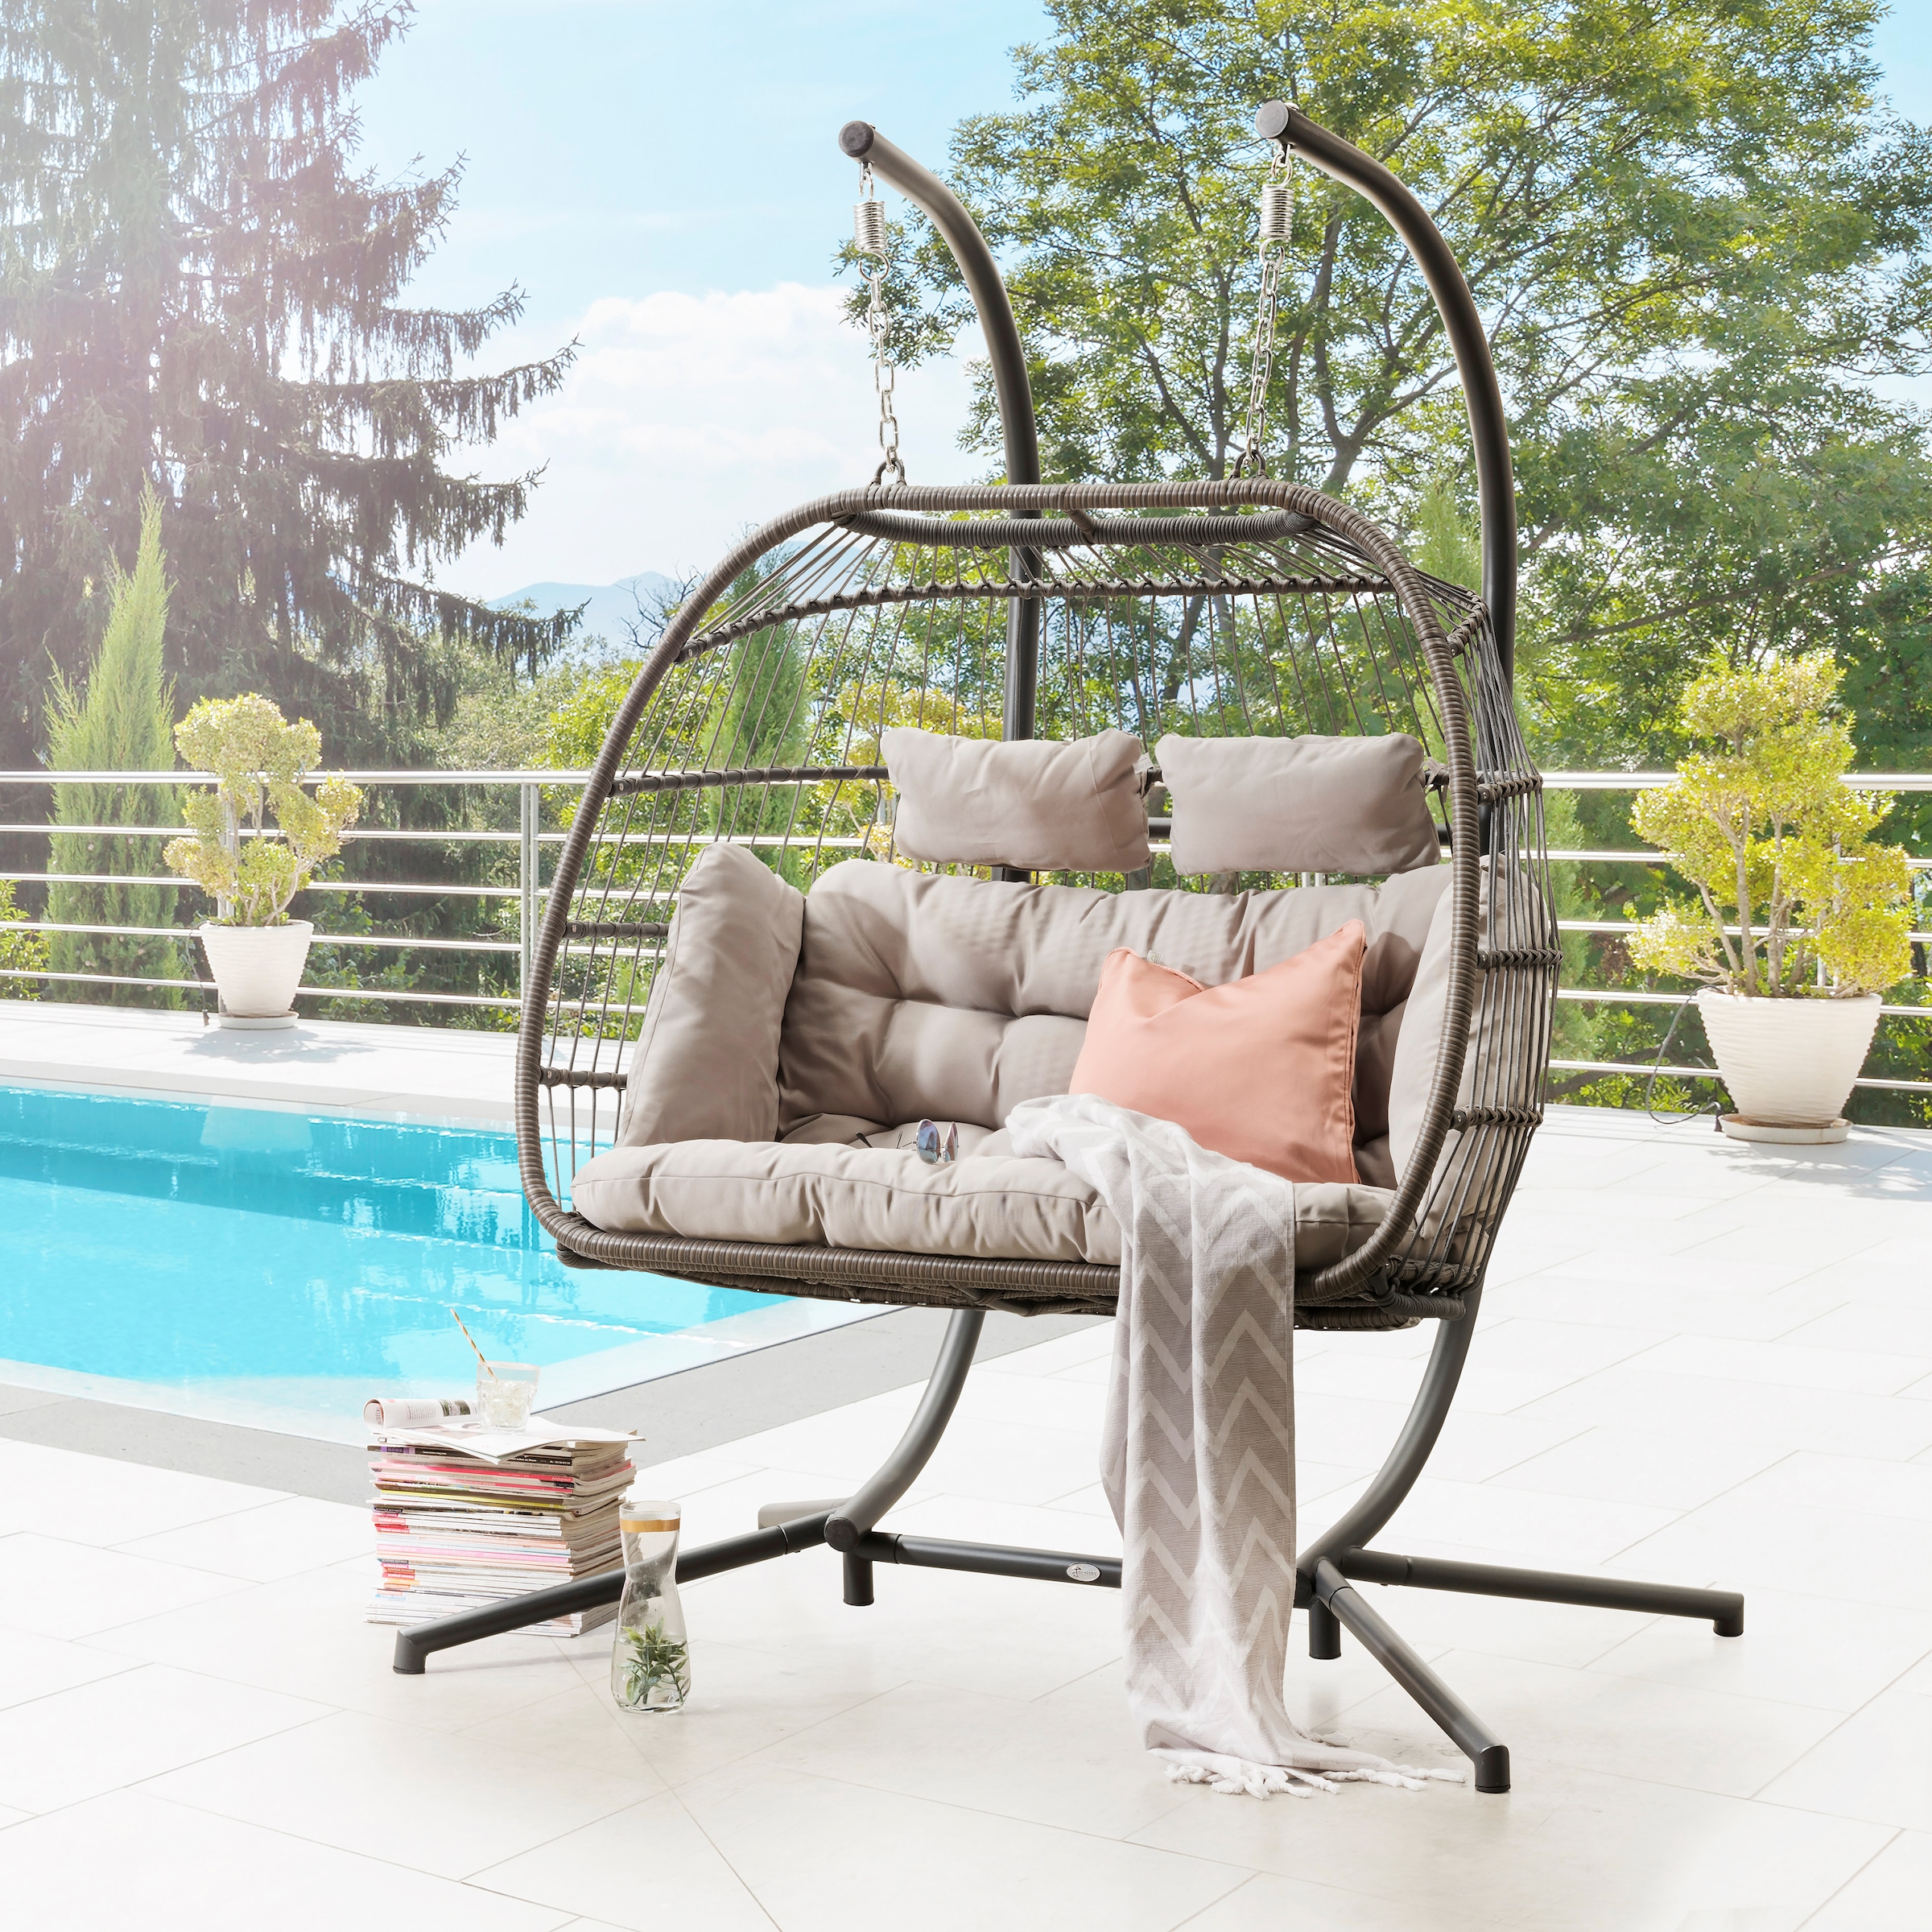 Aluminium-Stuhl online kaufen | Stühle aus Aluminium bei OTTO